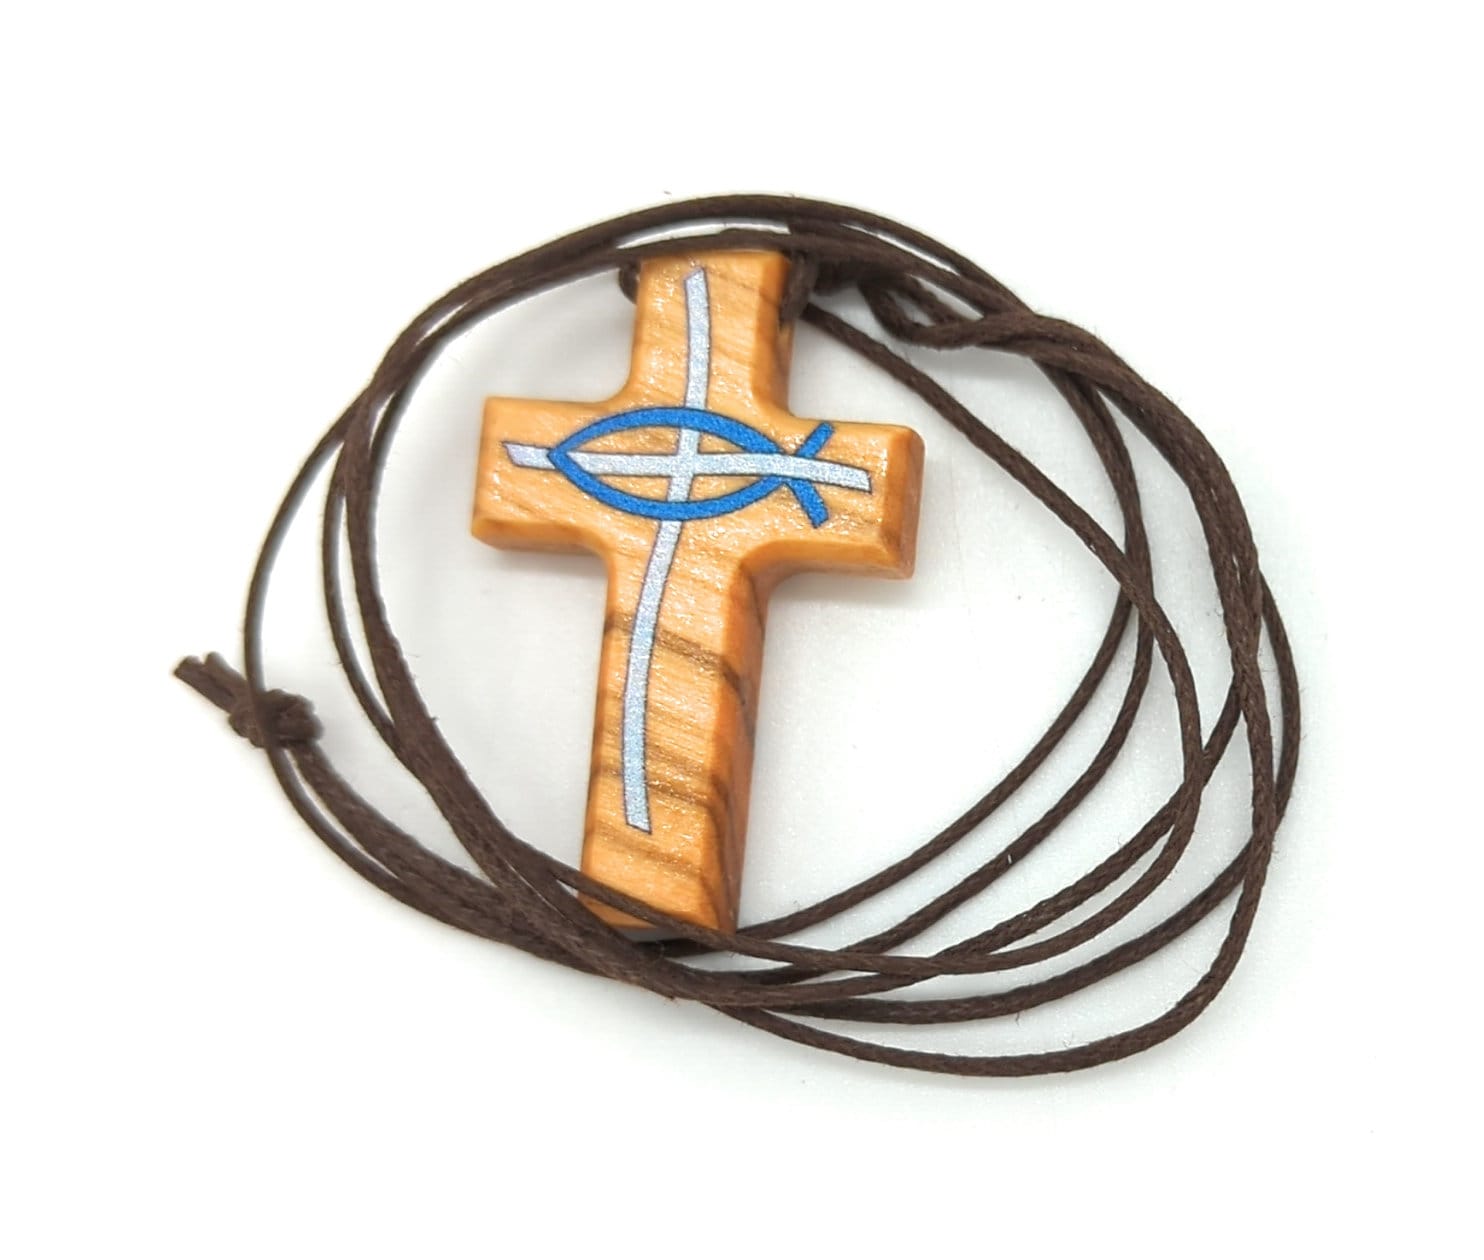 Charming olive wood cross necklace handmade in Nazareth For Men, Women,  Boys & Girls